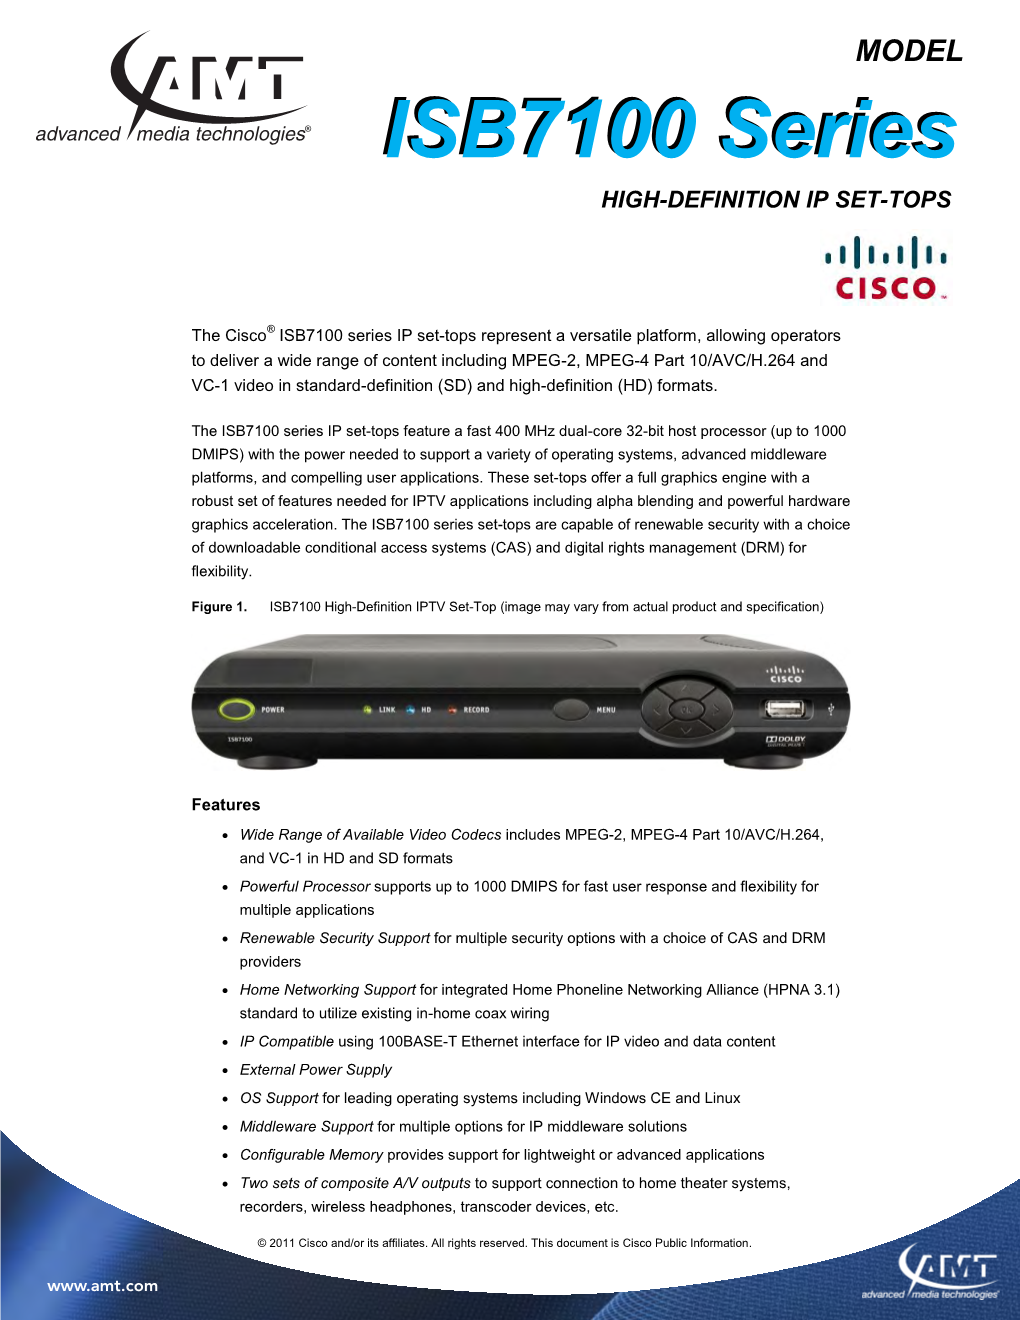 Cisco ISB7100 Series High-Definition IP Set-Tops Data Sheet